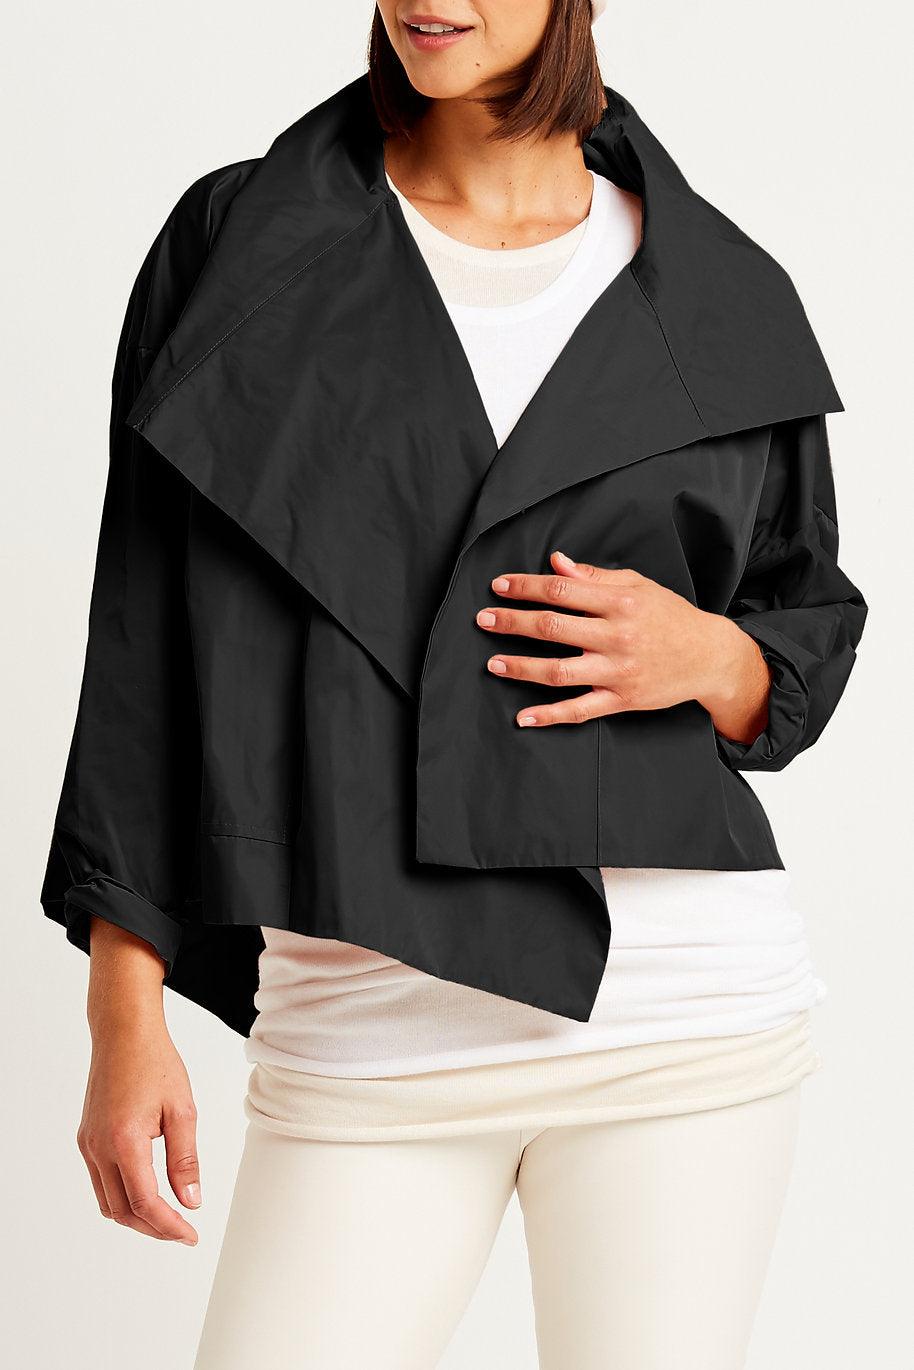 PLANET&nbsp;by Lauren G's Cropped Asymmetrical Jacket Black